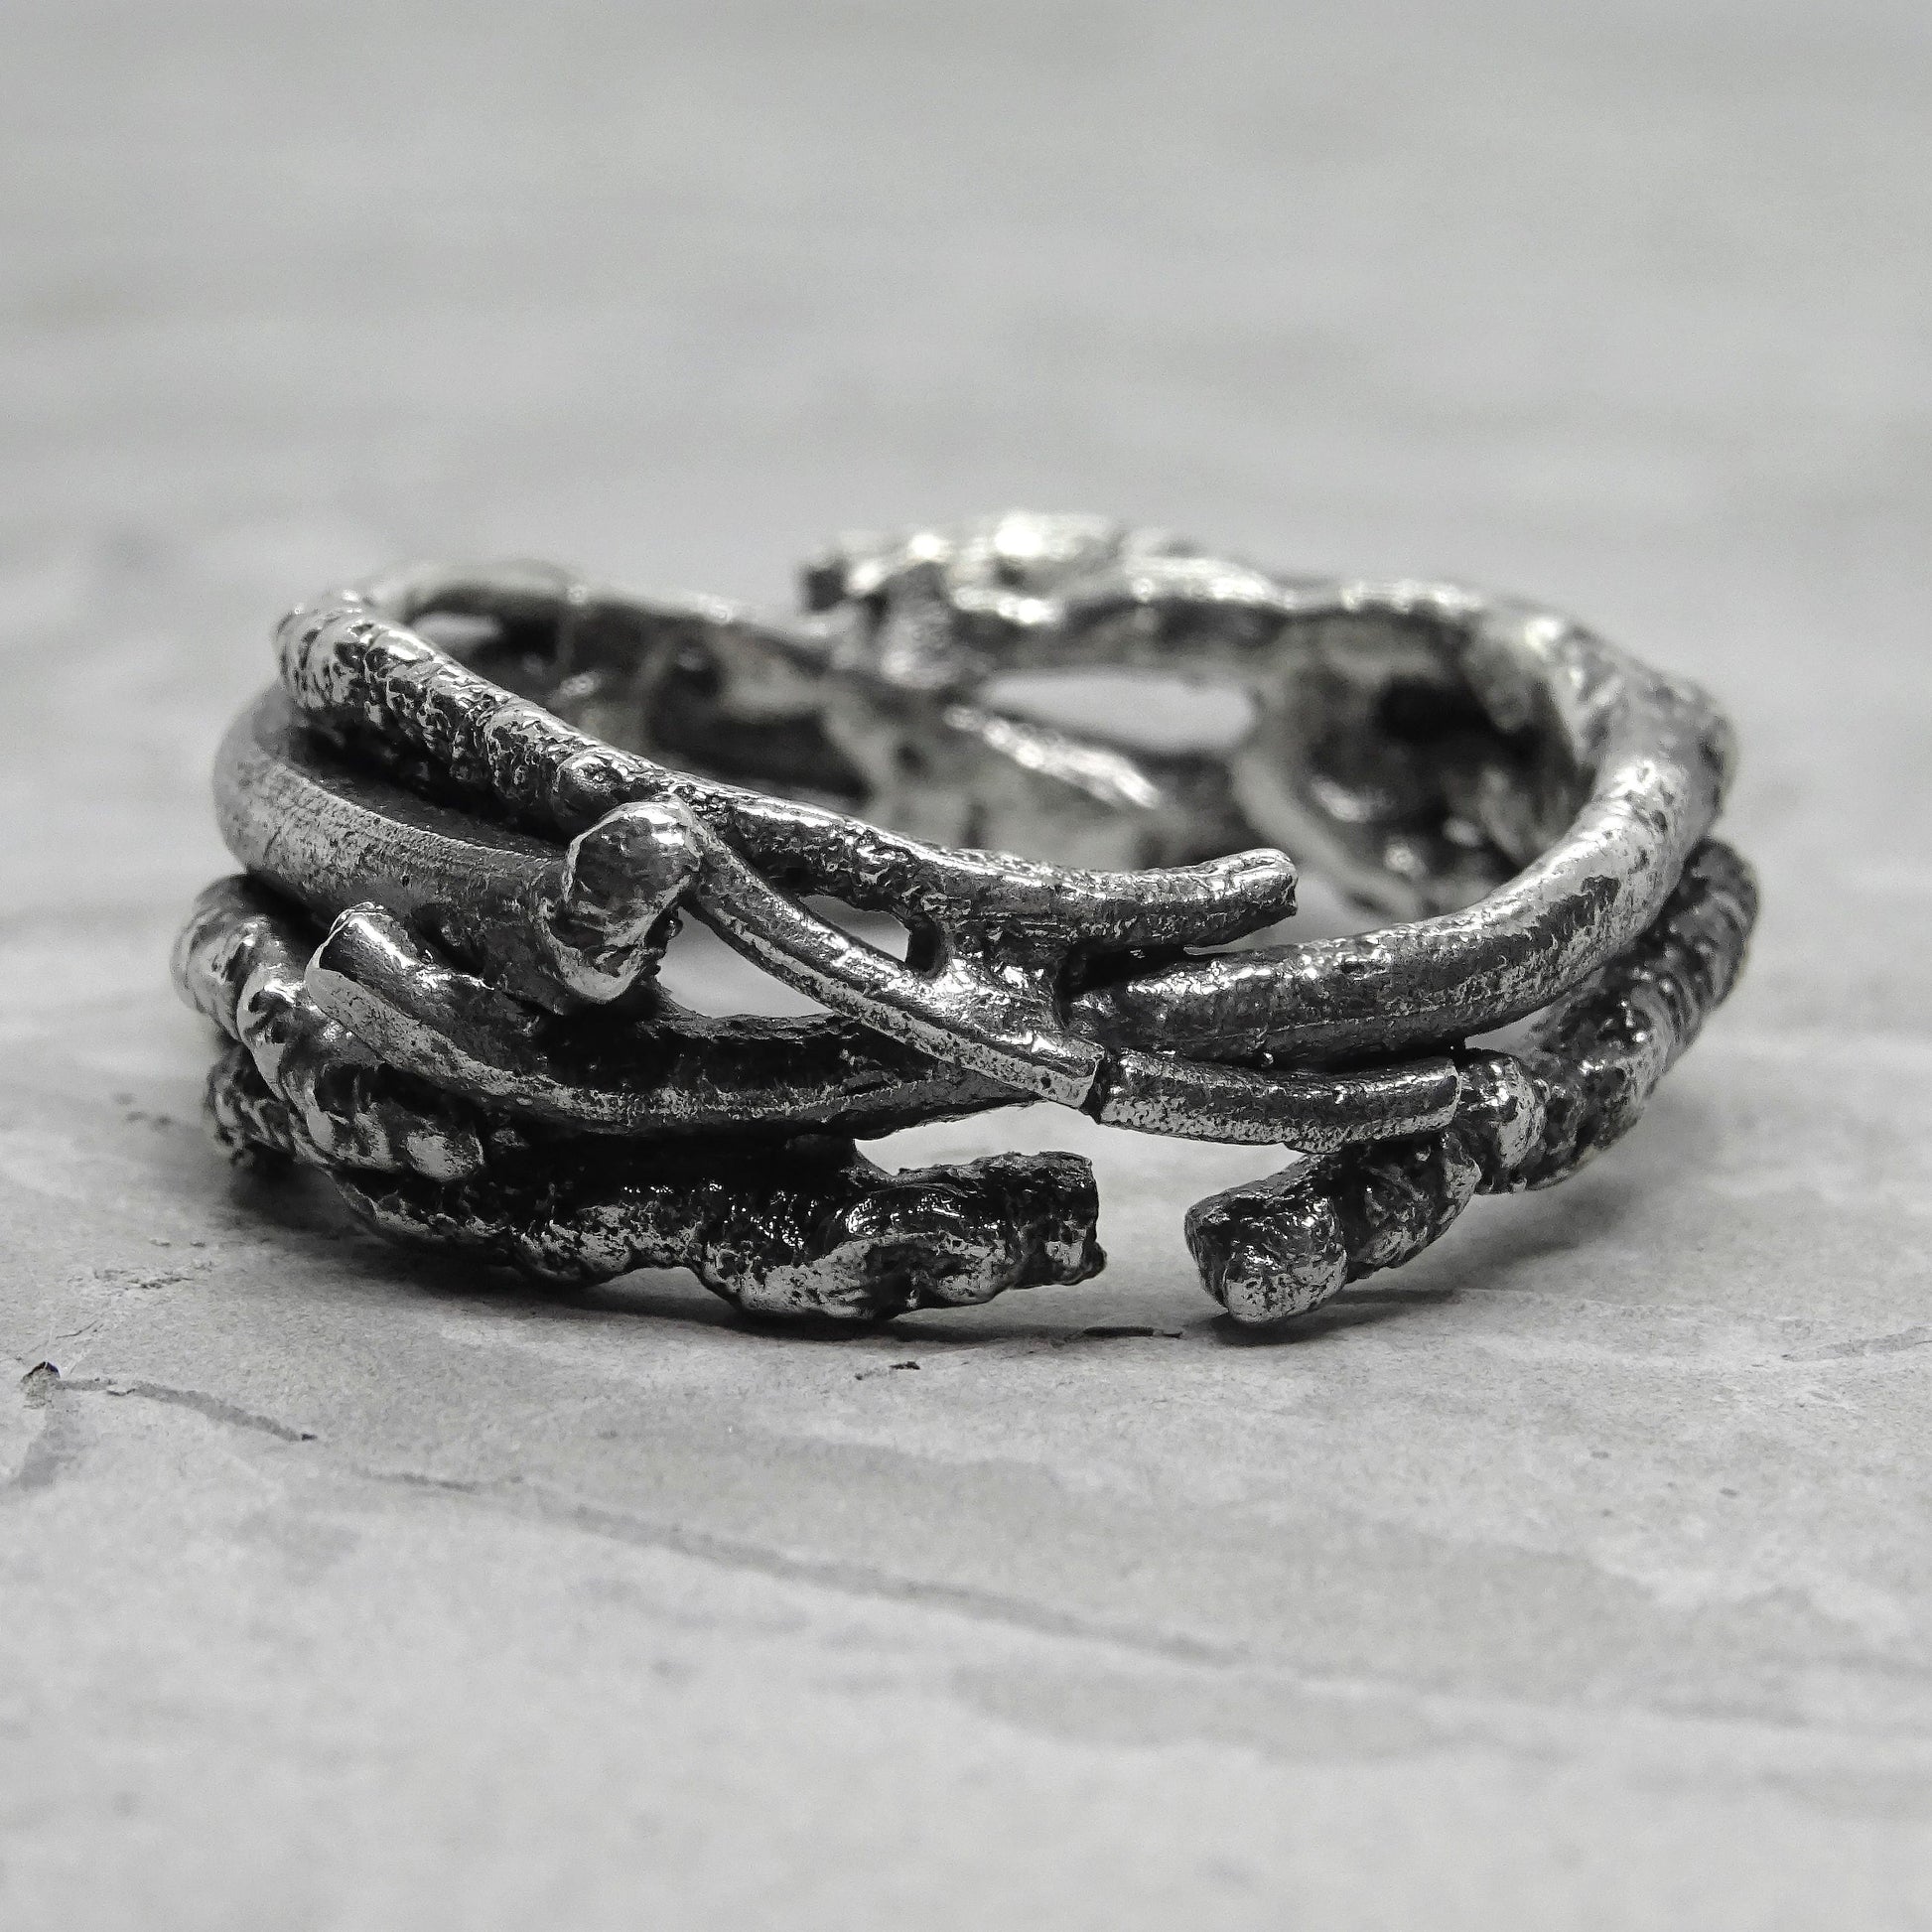 Brashwood ring- lightweight ring made of interlacing textured stripes Lightweight rings Project50g 